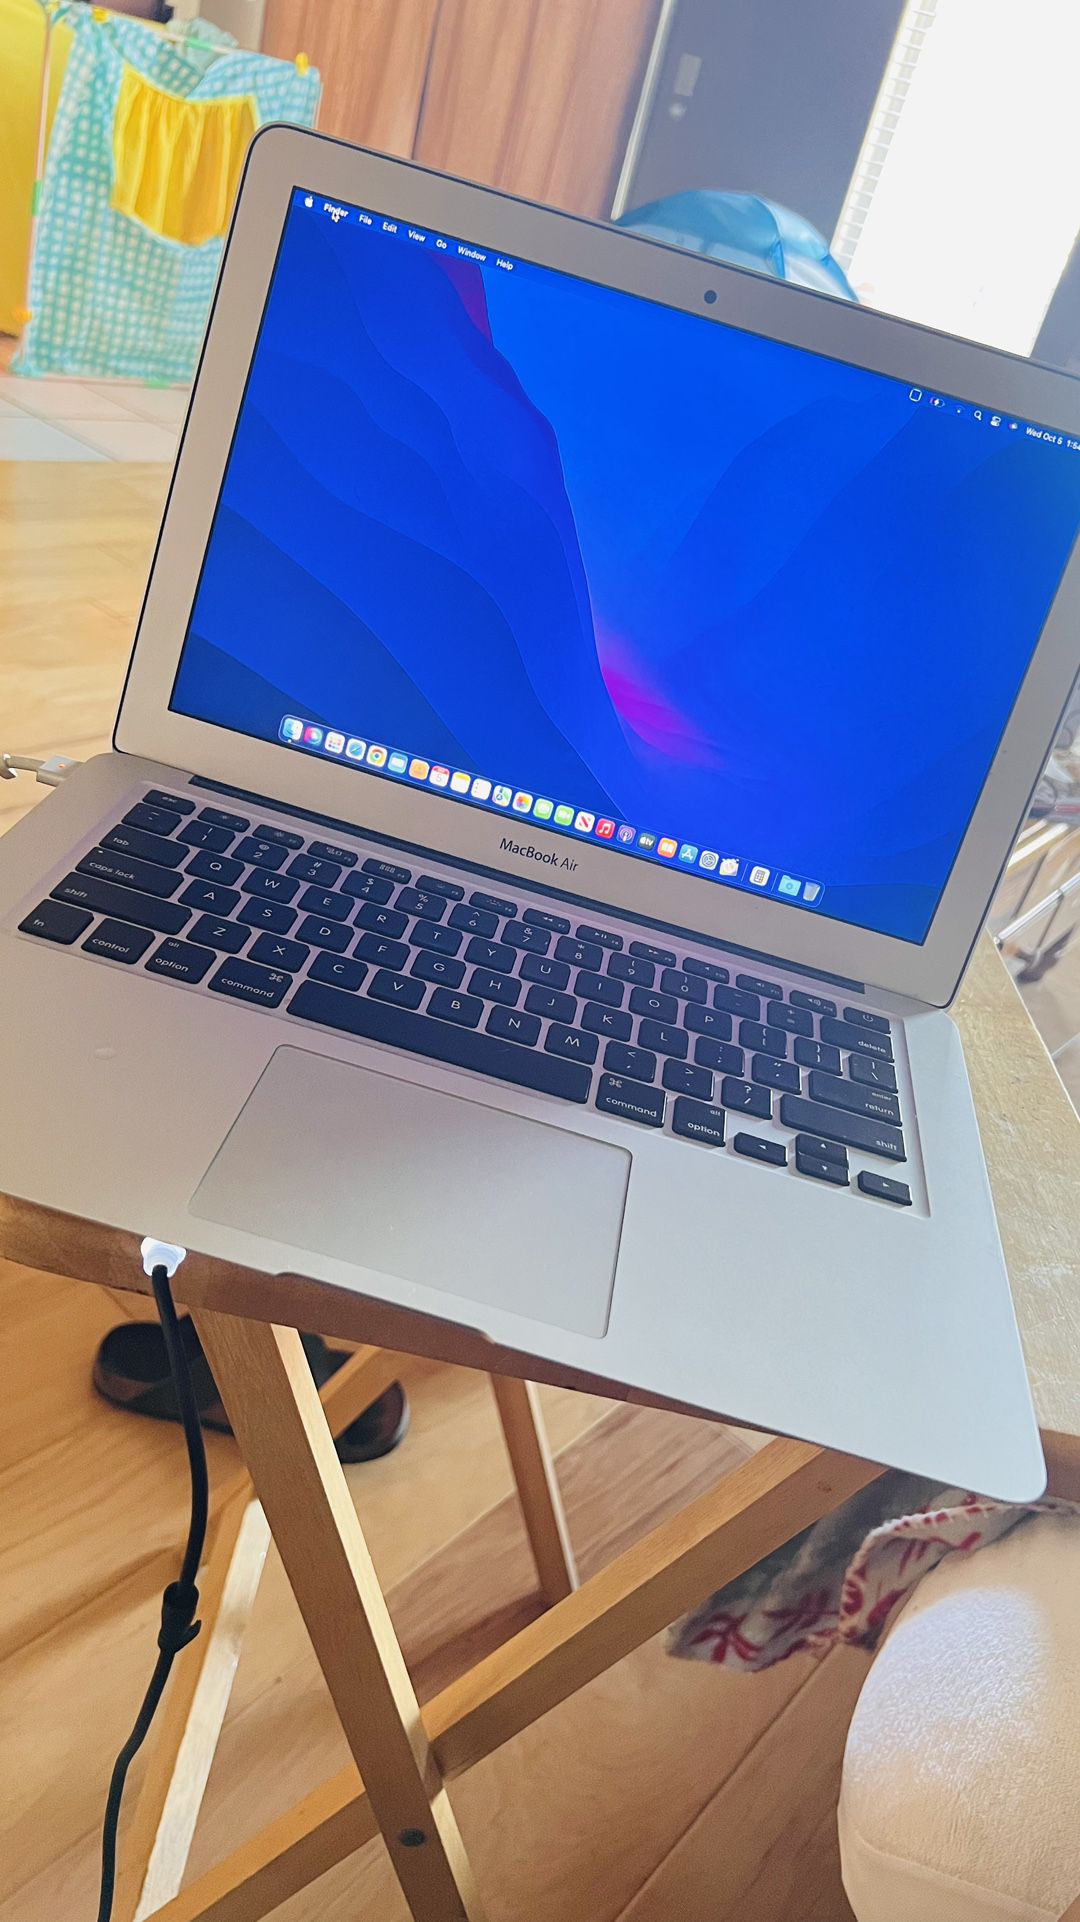 MacBook Air 13-inch (early 2015)